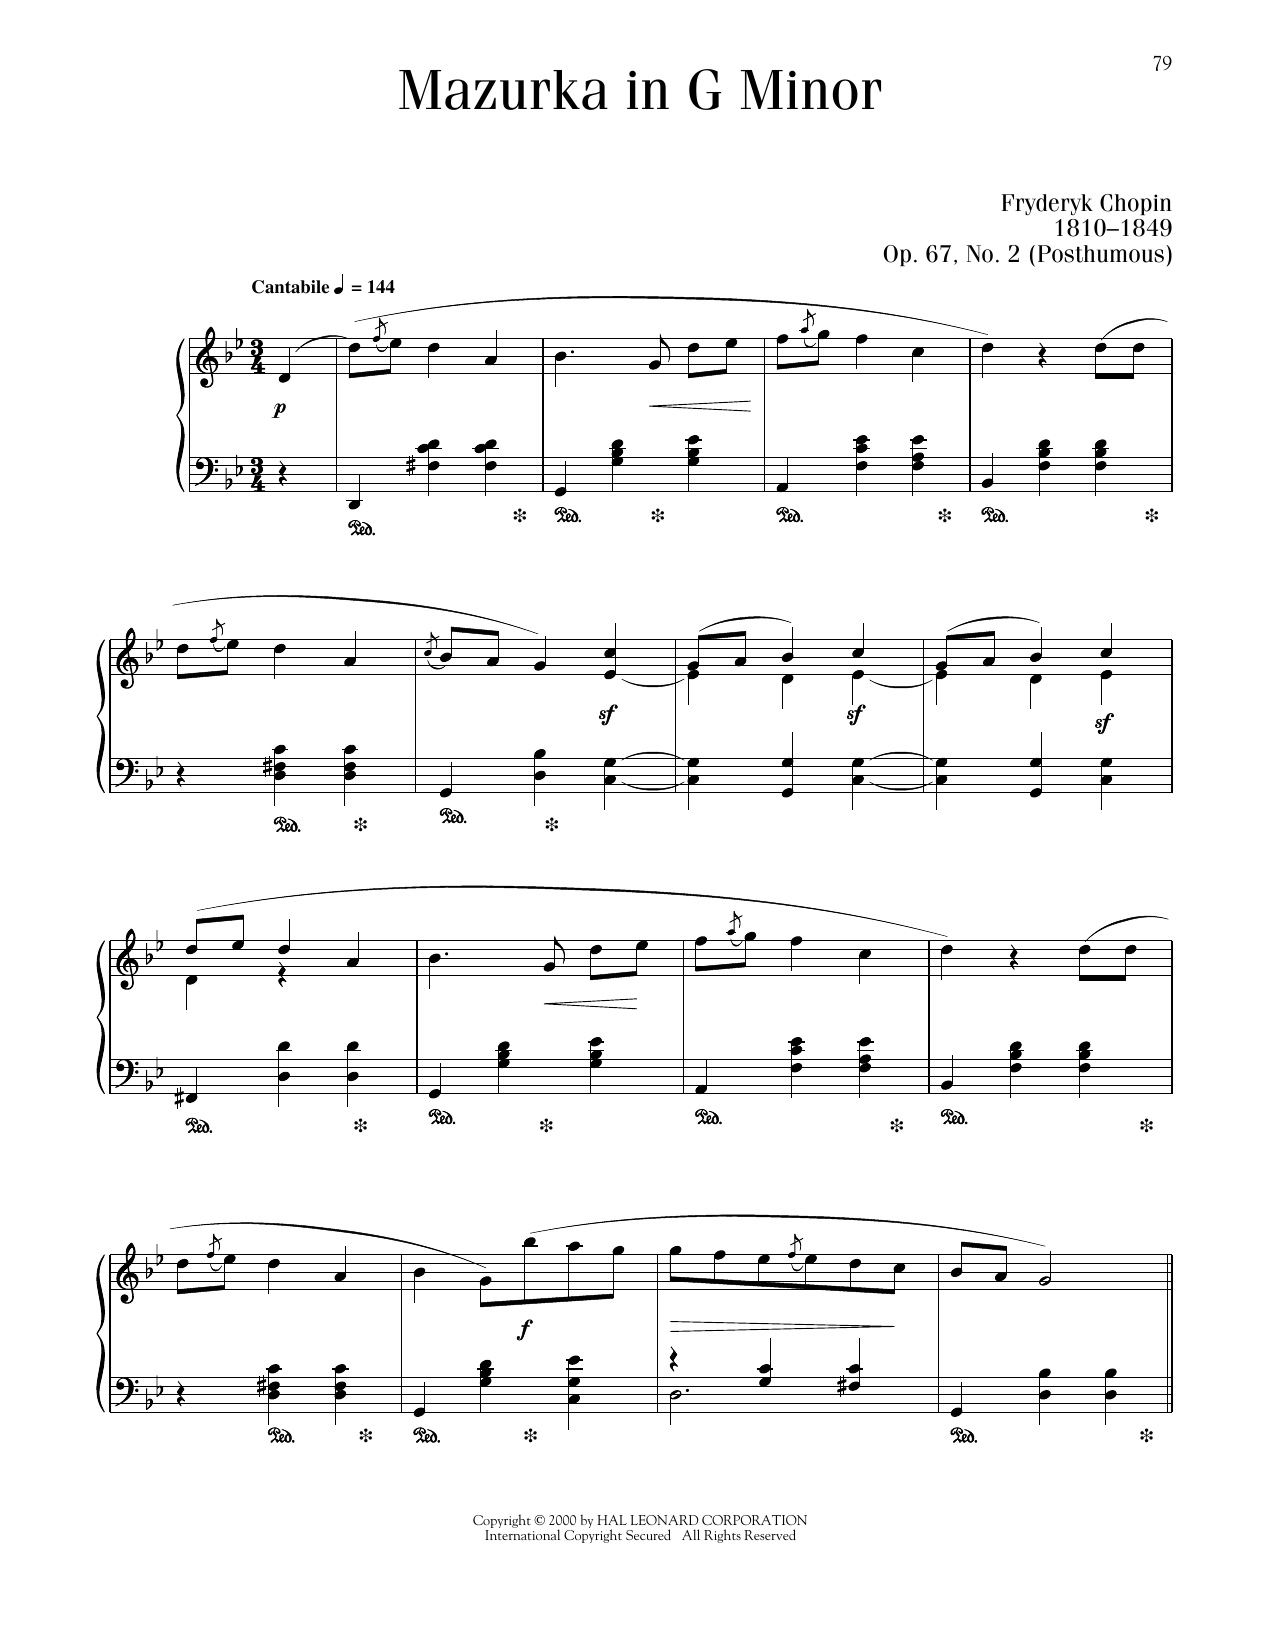 Frederic Chopin Mazurka, Op. 67, No. 2 sheet music notes printable PDF score